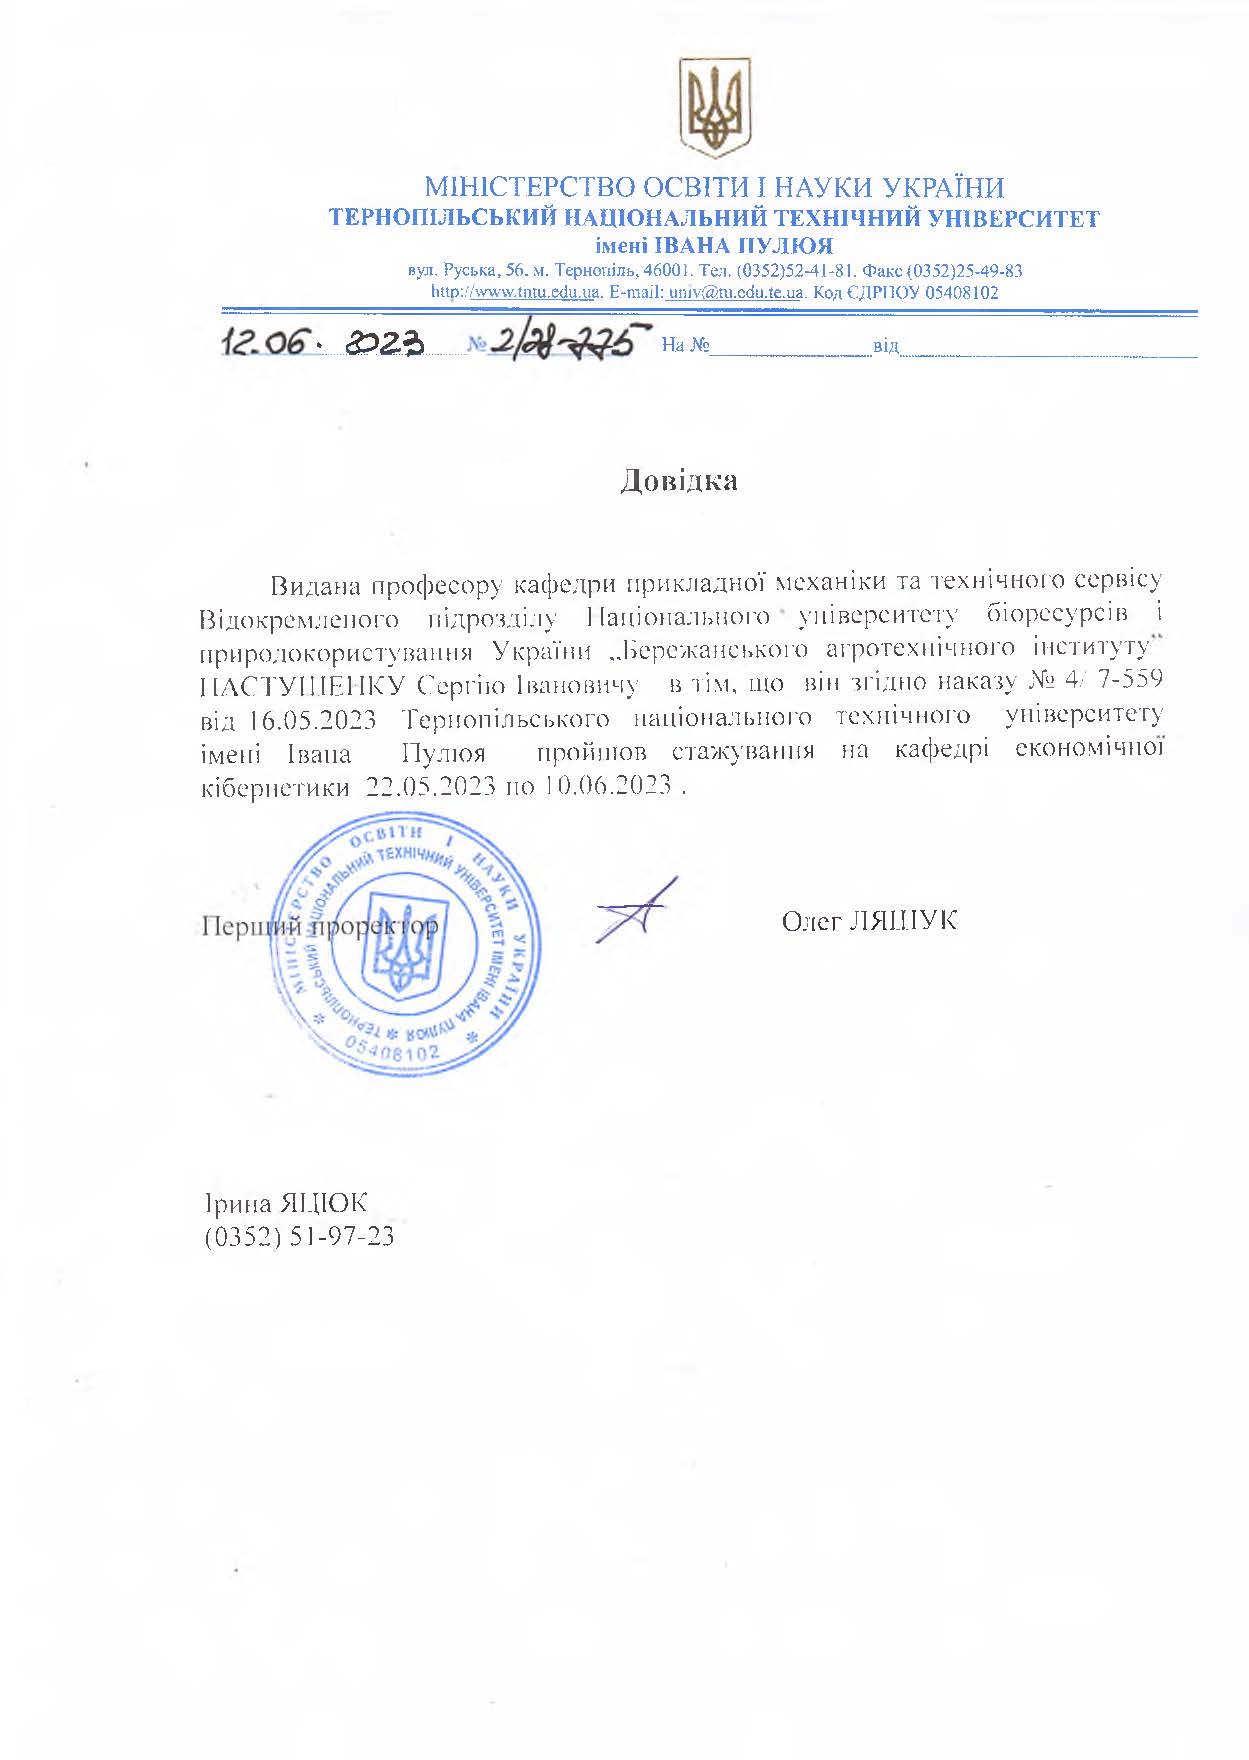 Certificate Fedyniak